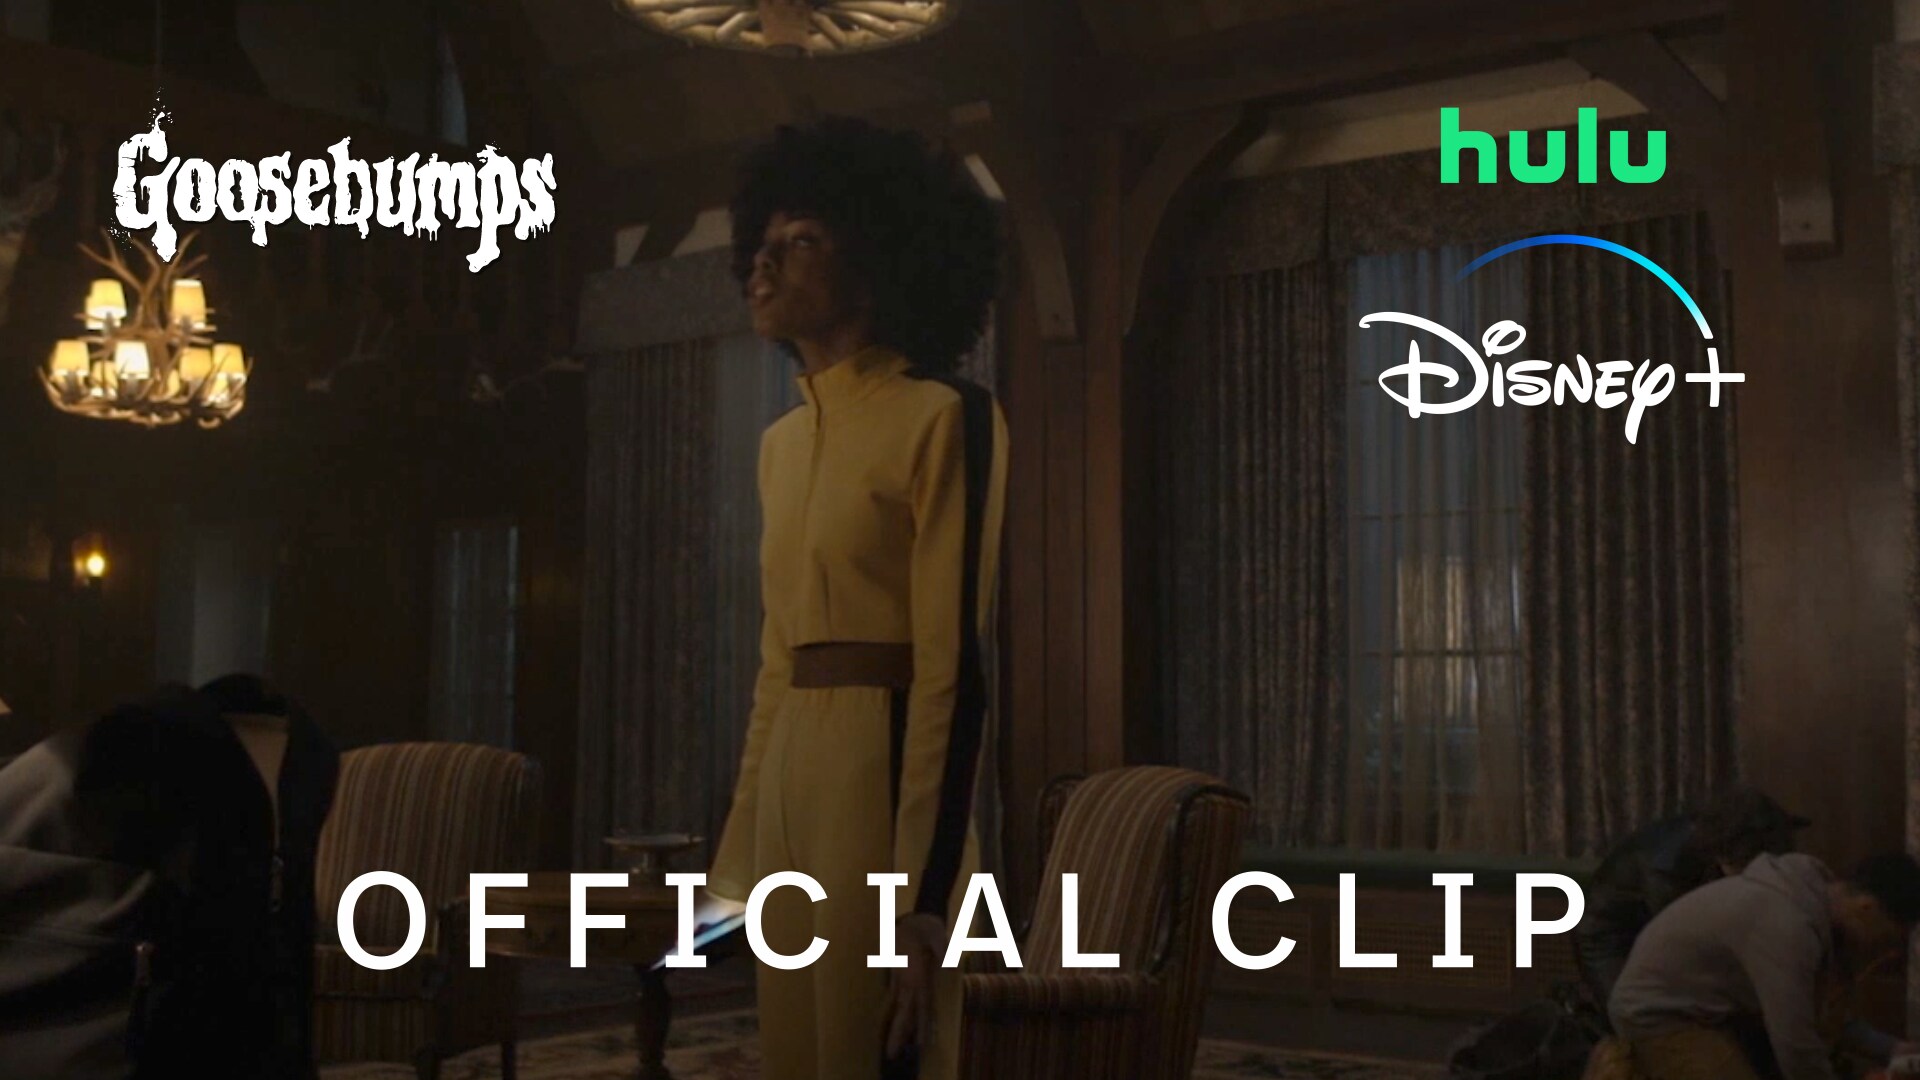 Haunted House | Goosebumps | Disney+ and Hulu